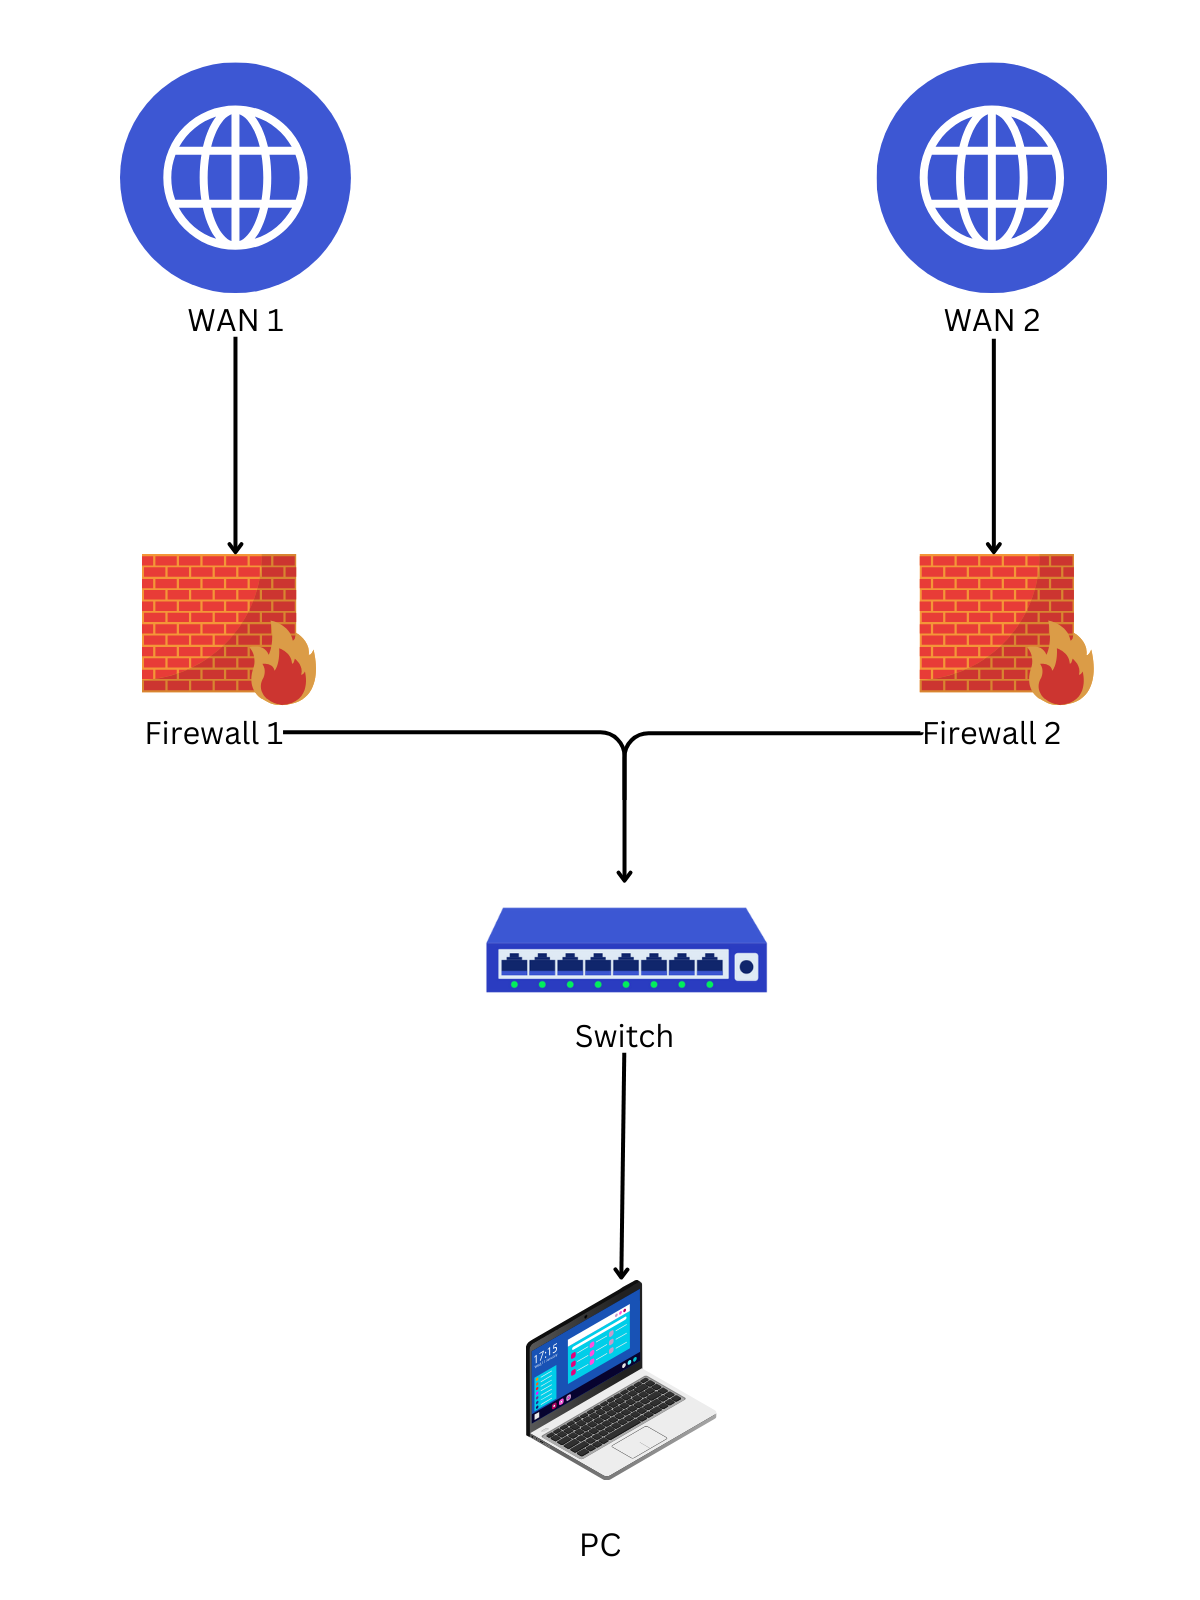 Monitor Dual-WAN Networks